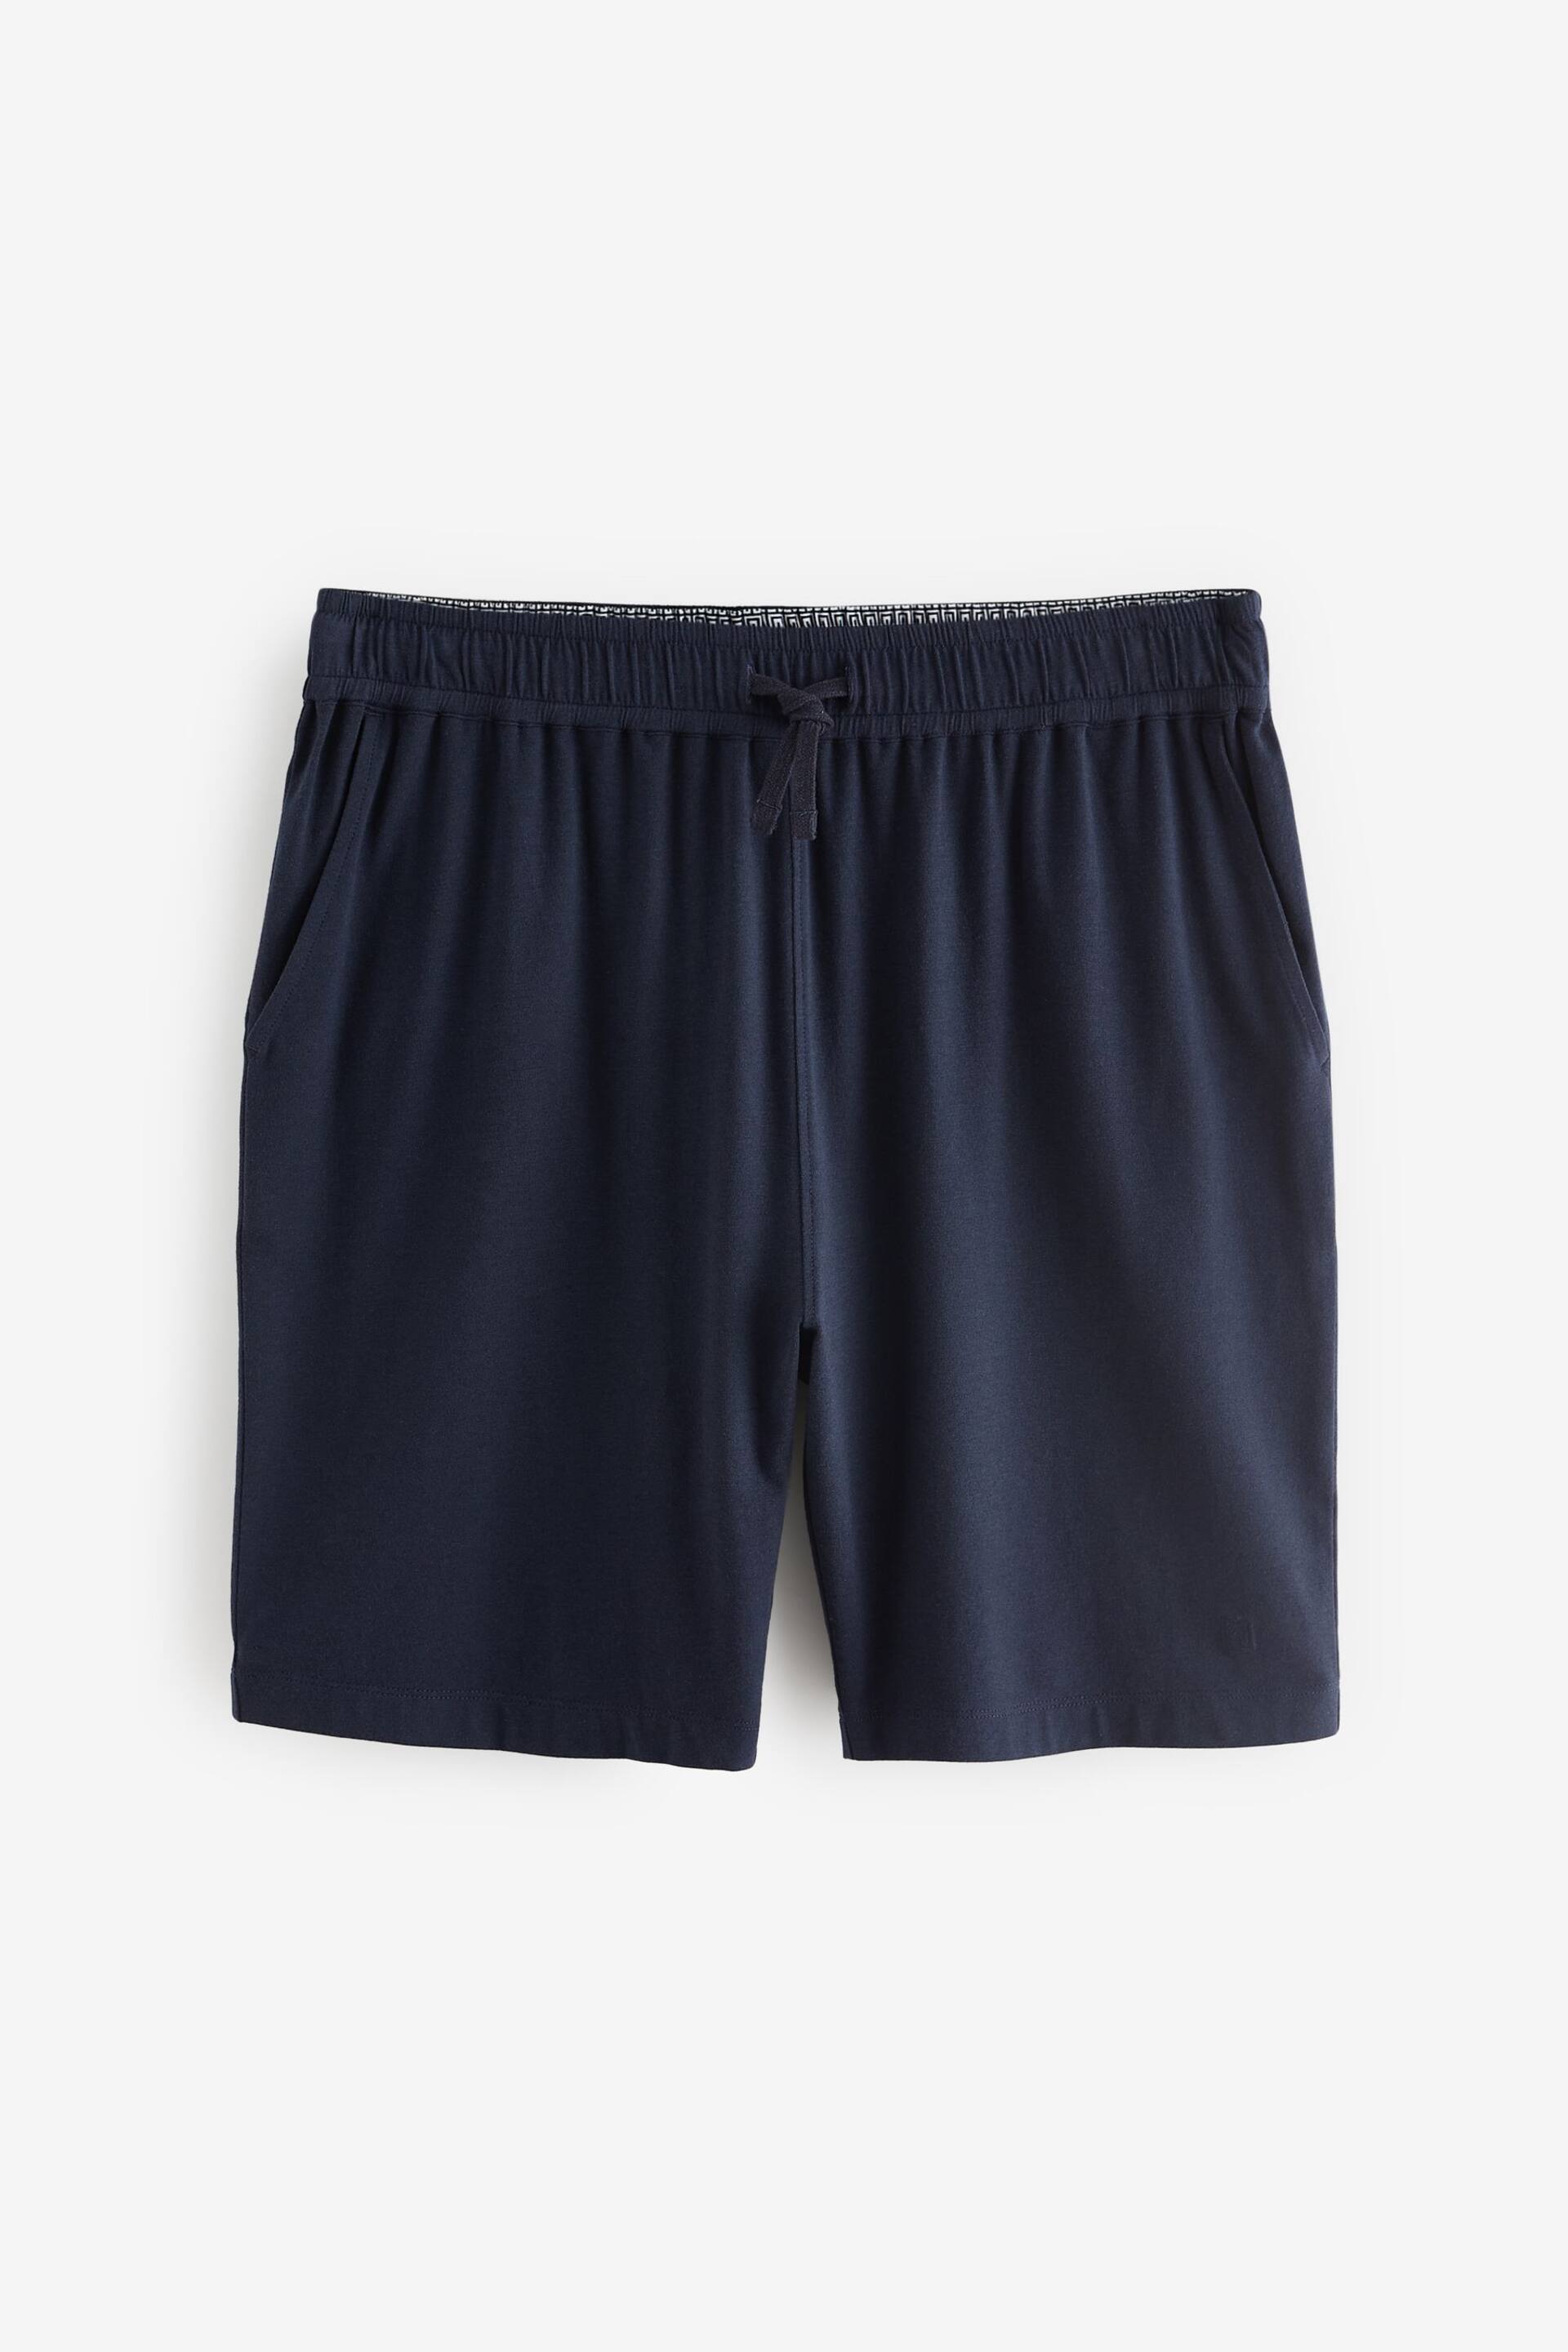 Navy Blue/Orange Modal Lightweight Shorts 2 Pack - Image 11 of 15